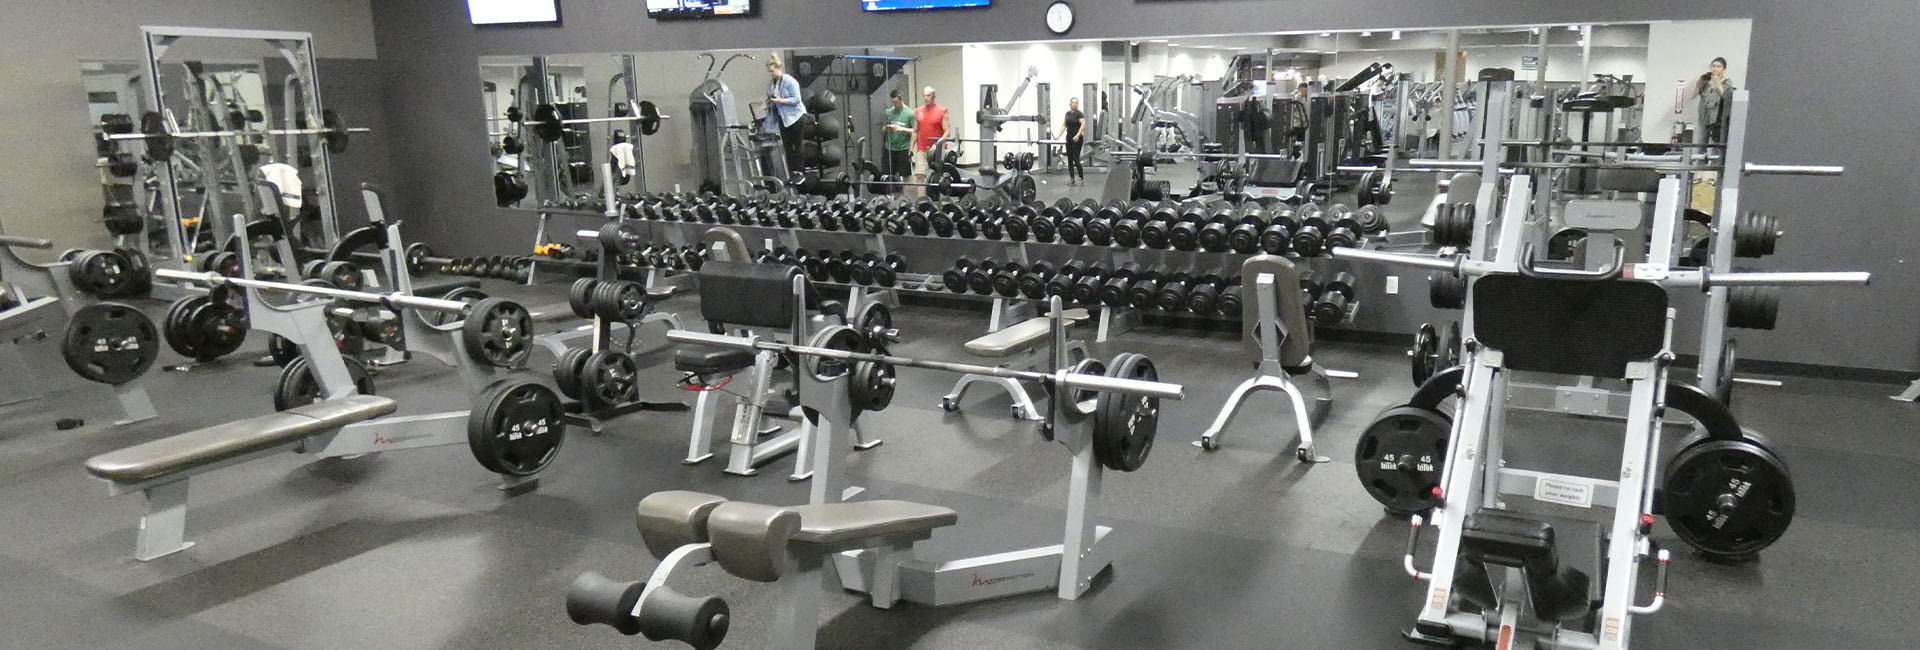 strength training area in a modern gym near me